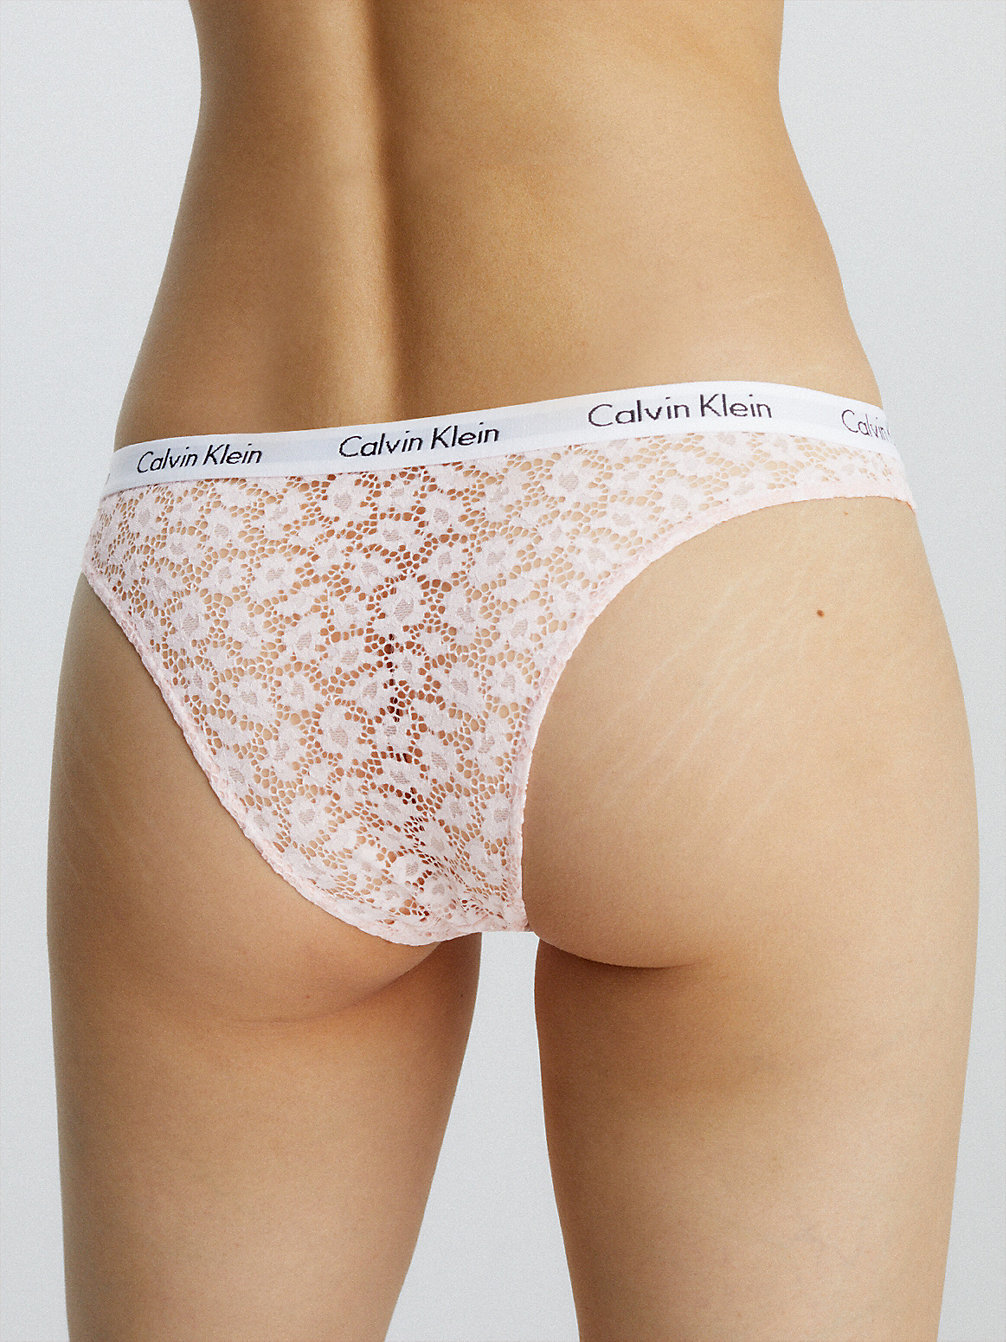 NYMPHS THIGH Brazilian Slips - Carousel undefined Damen Calvin Klein